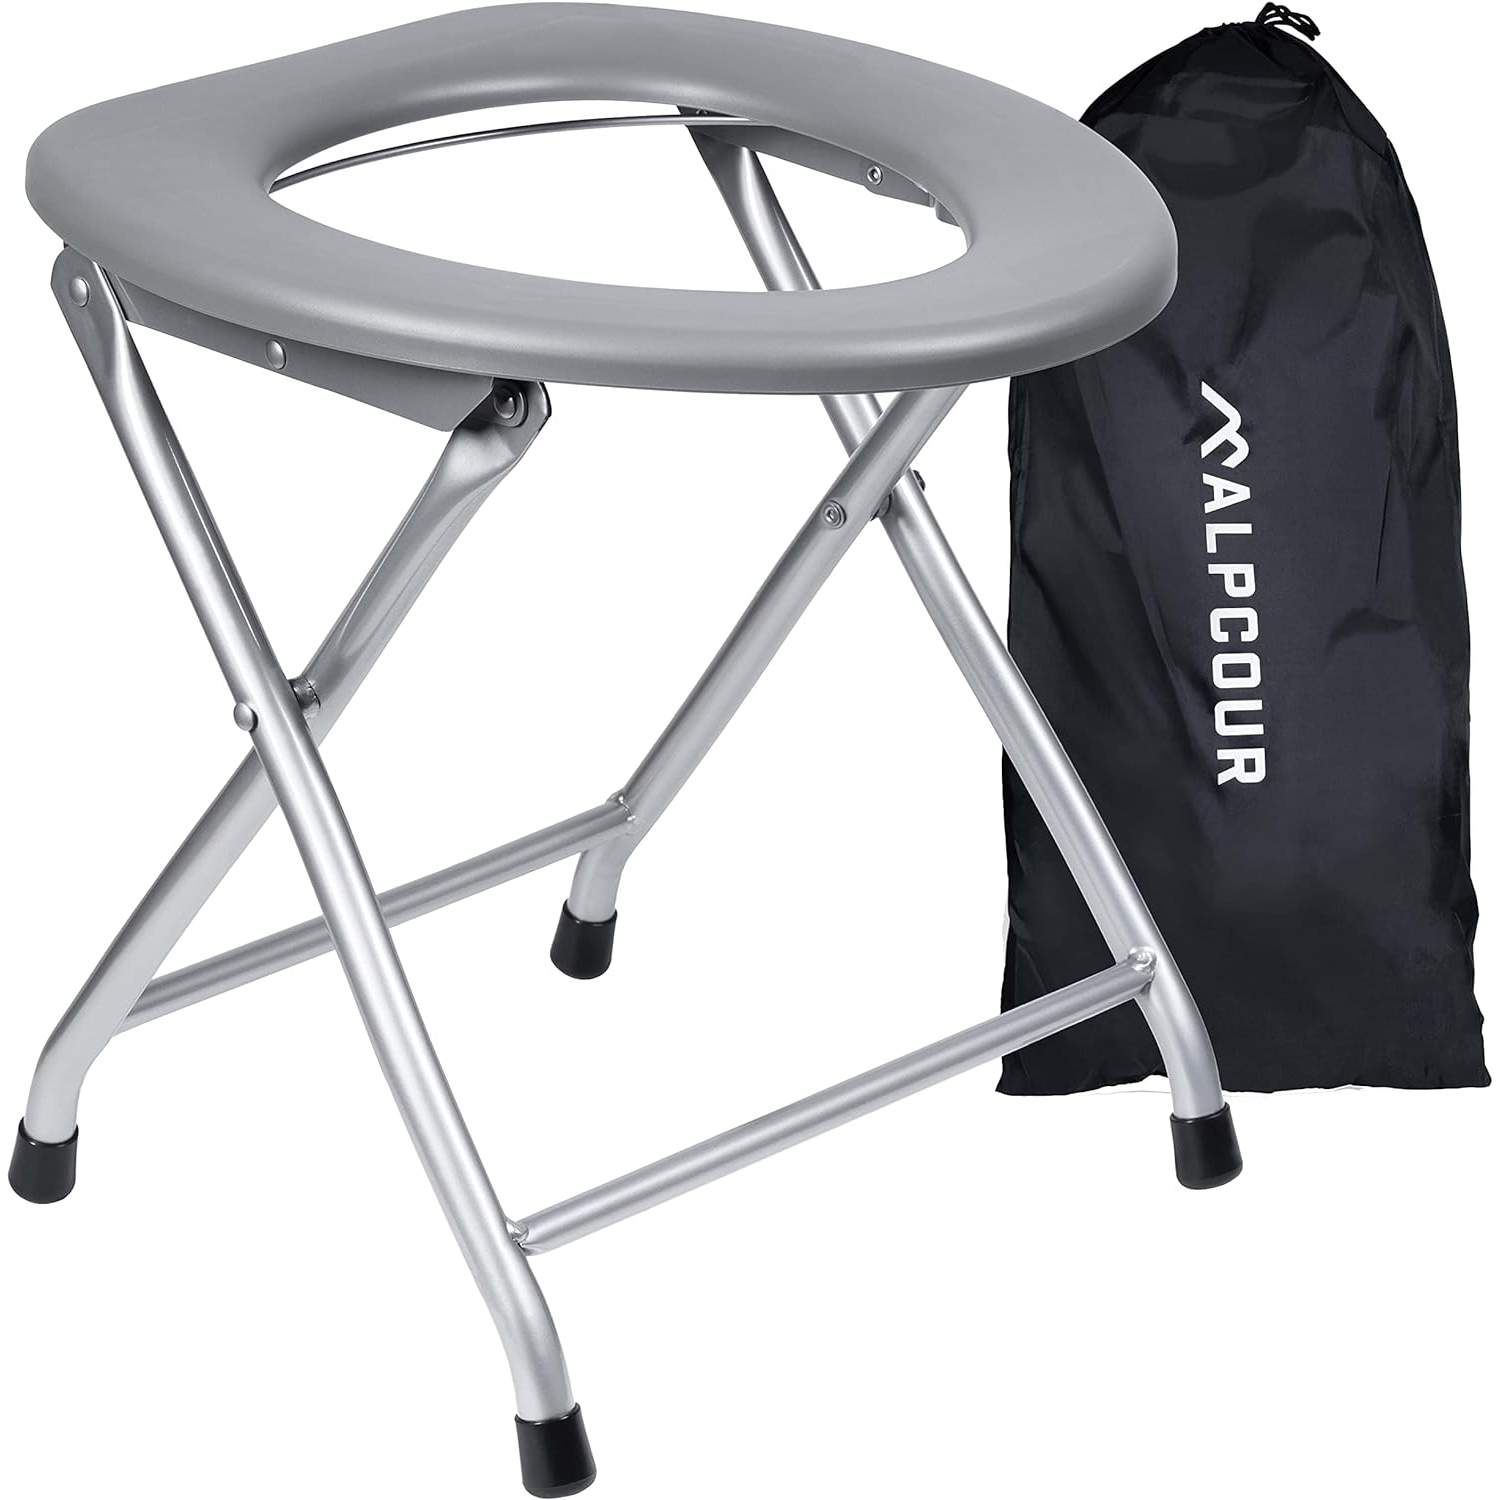 Alpcour Portable Toilet Seat - Compact, Bag Hooks, Travel Bag, Steel Frame